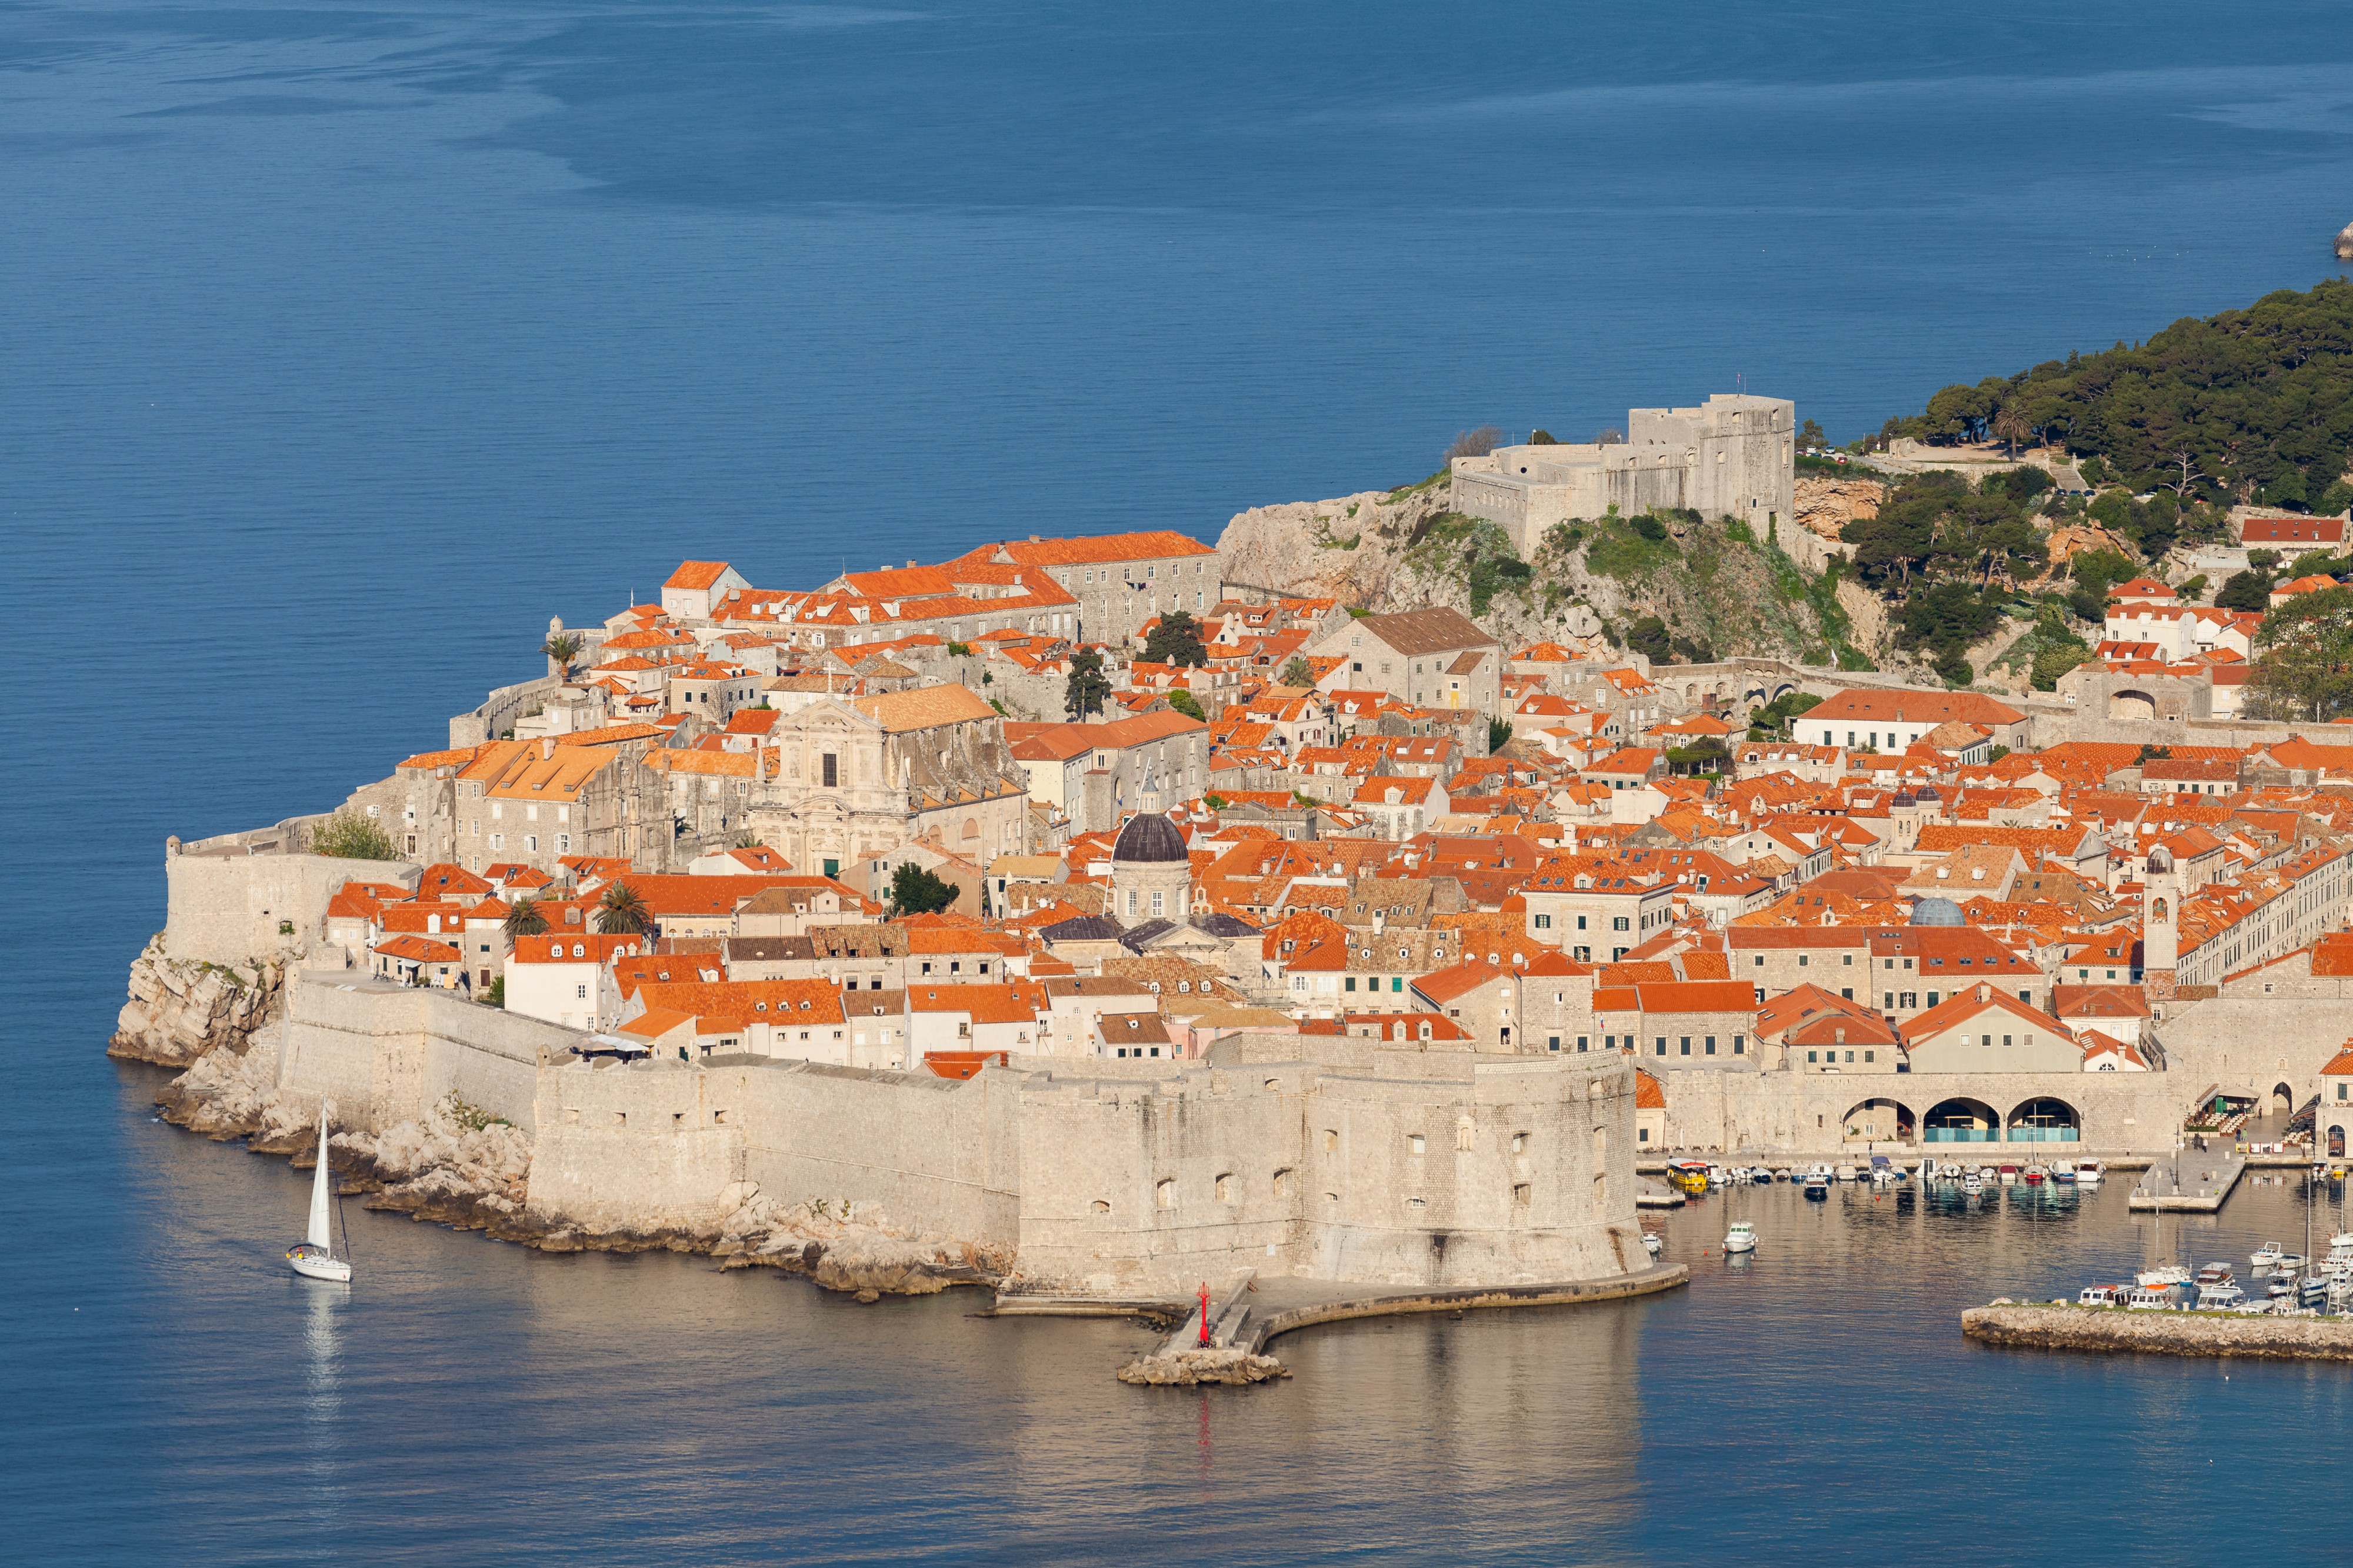 Casco viejo de Dubrovnik, Croacia, 2014-04-14, DD 06